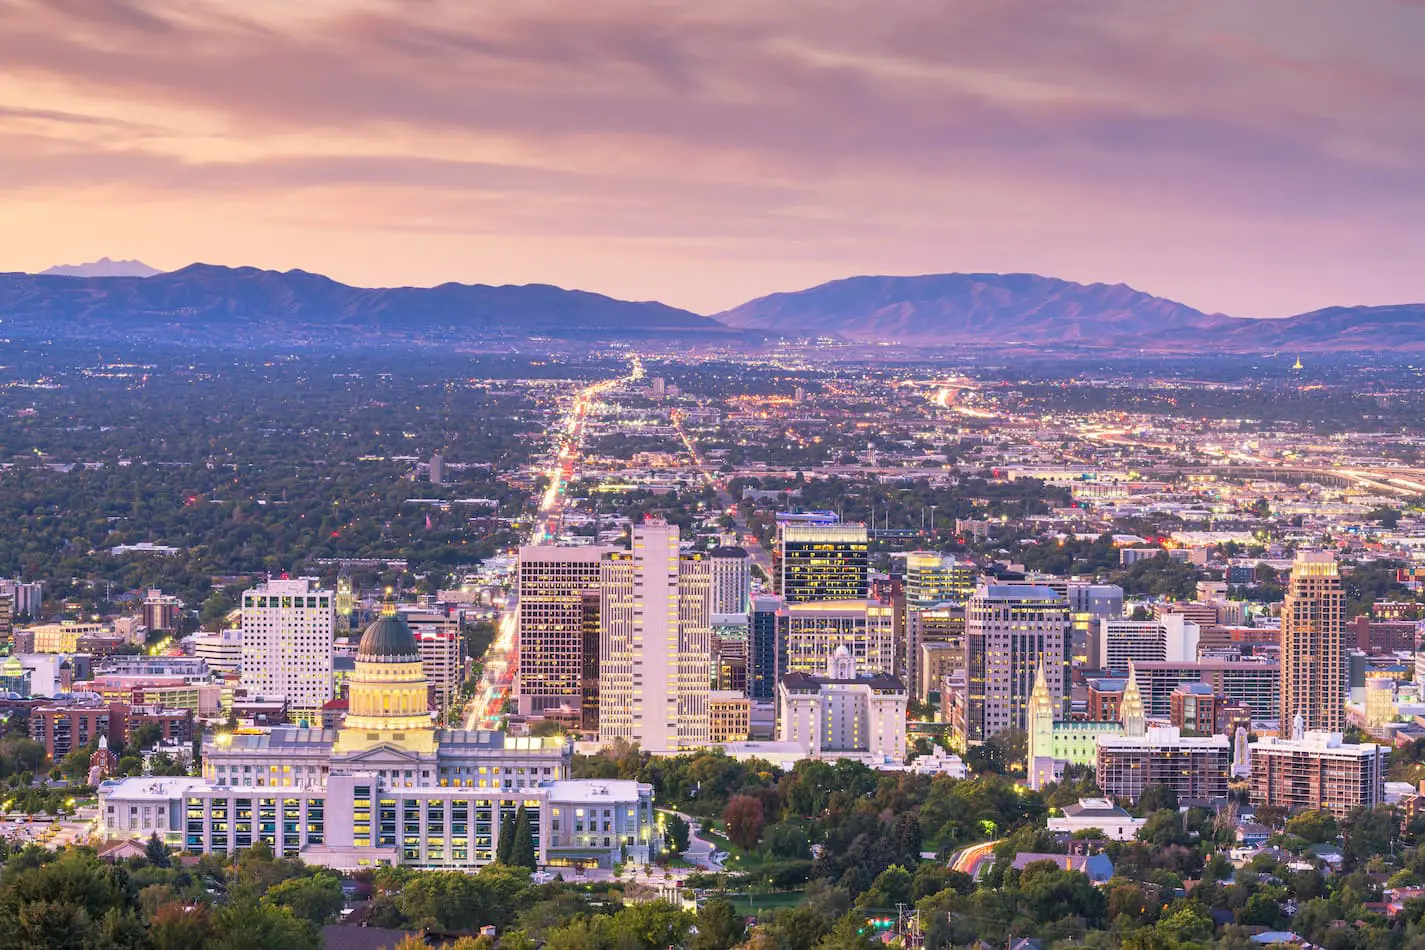 An image of downtown Salt Lake City.